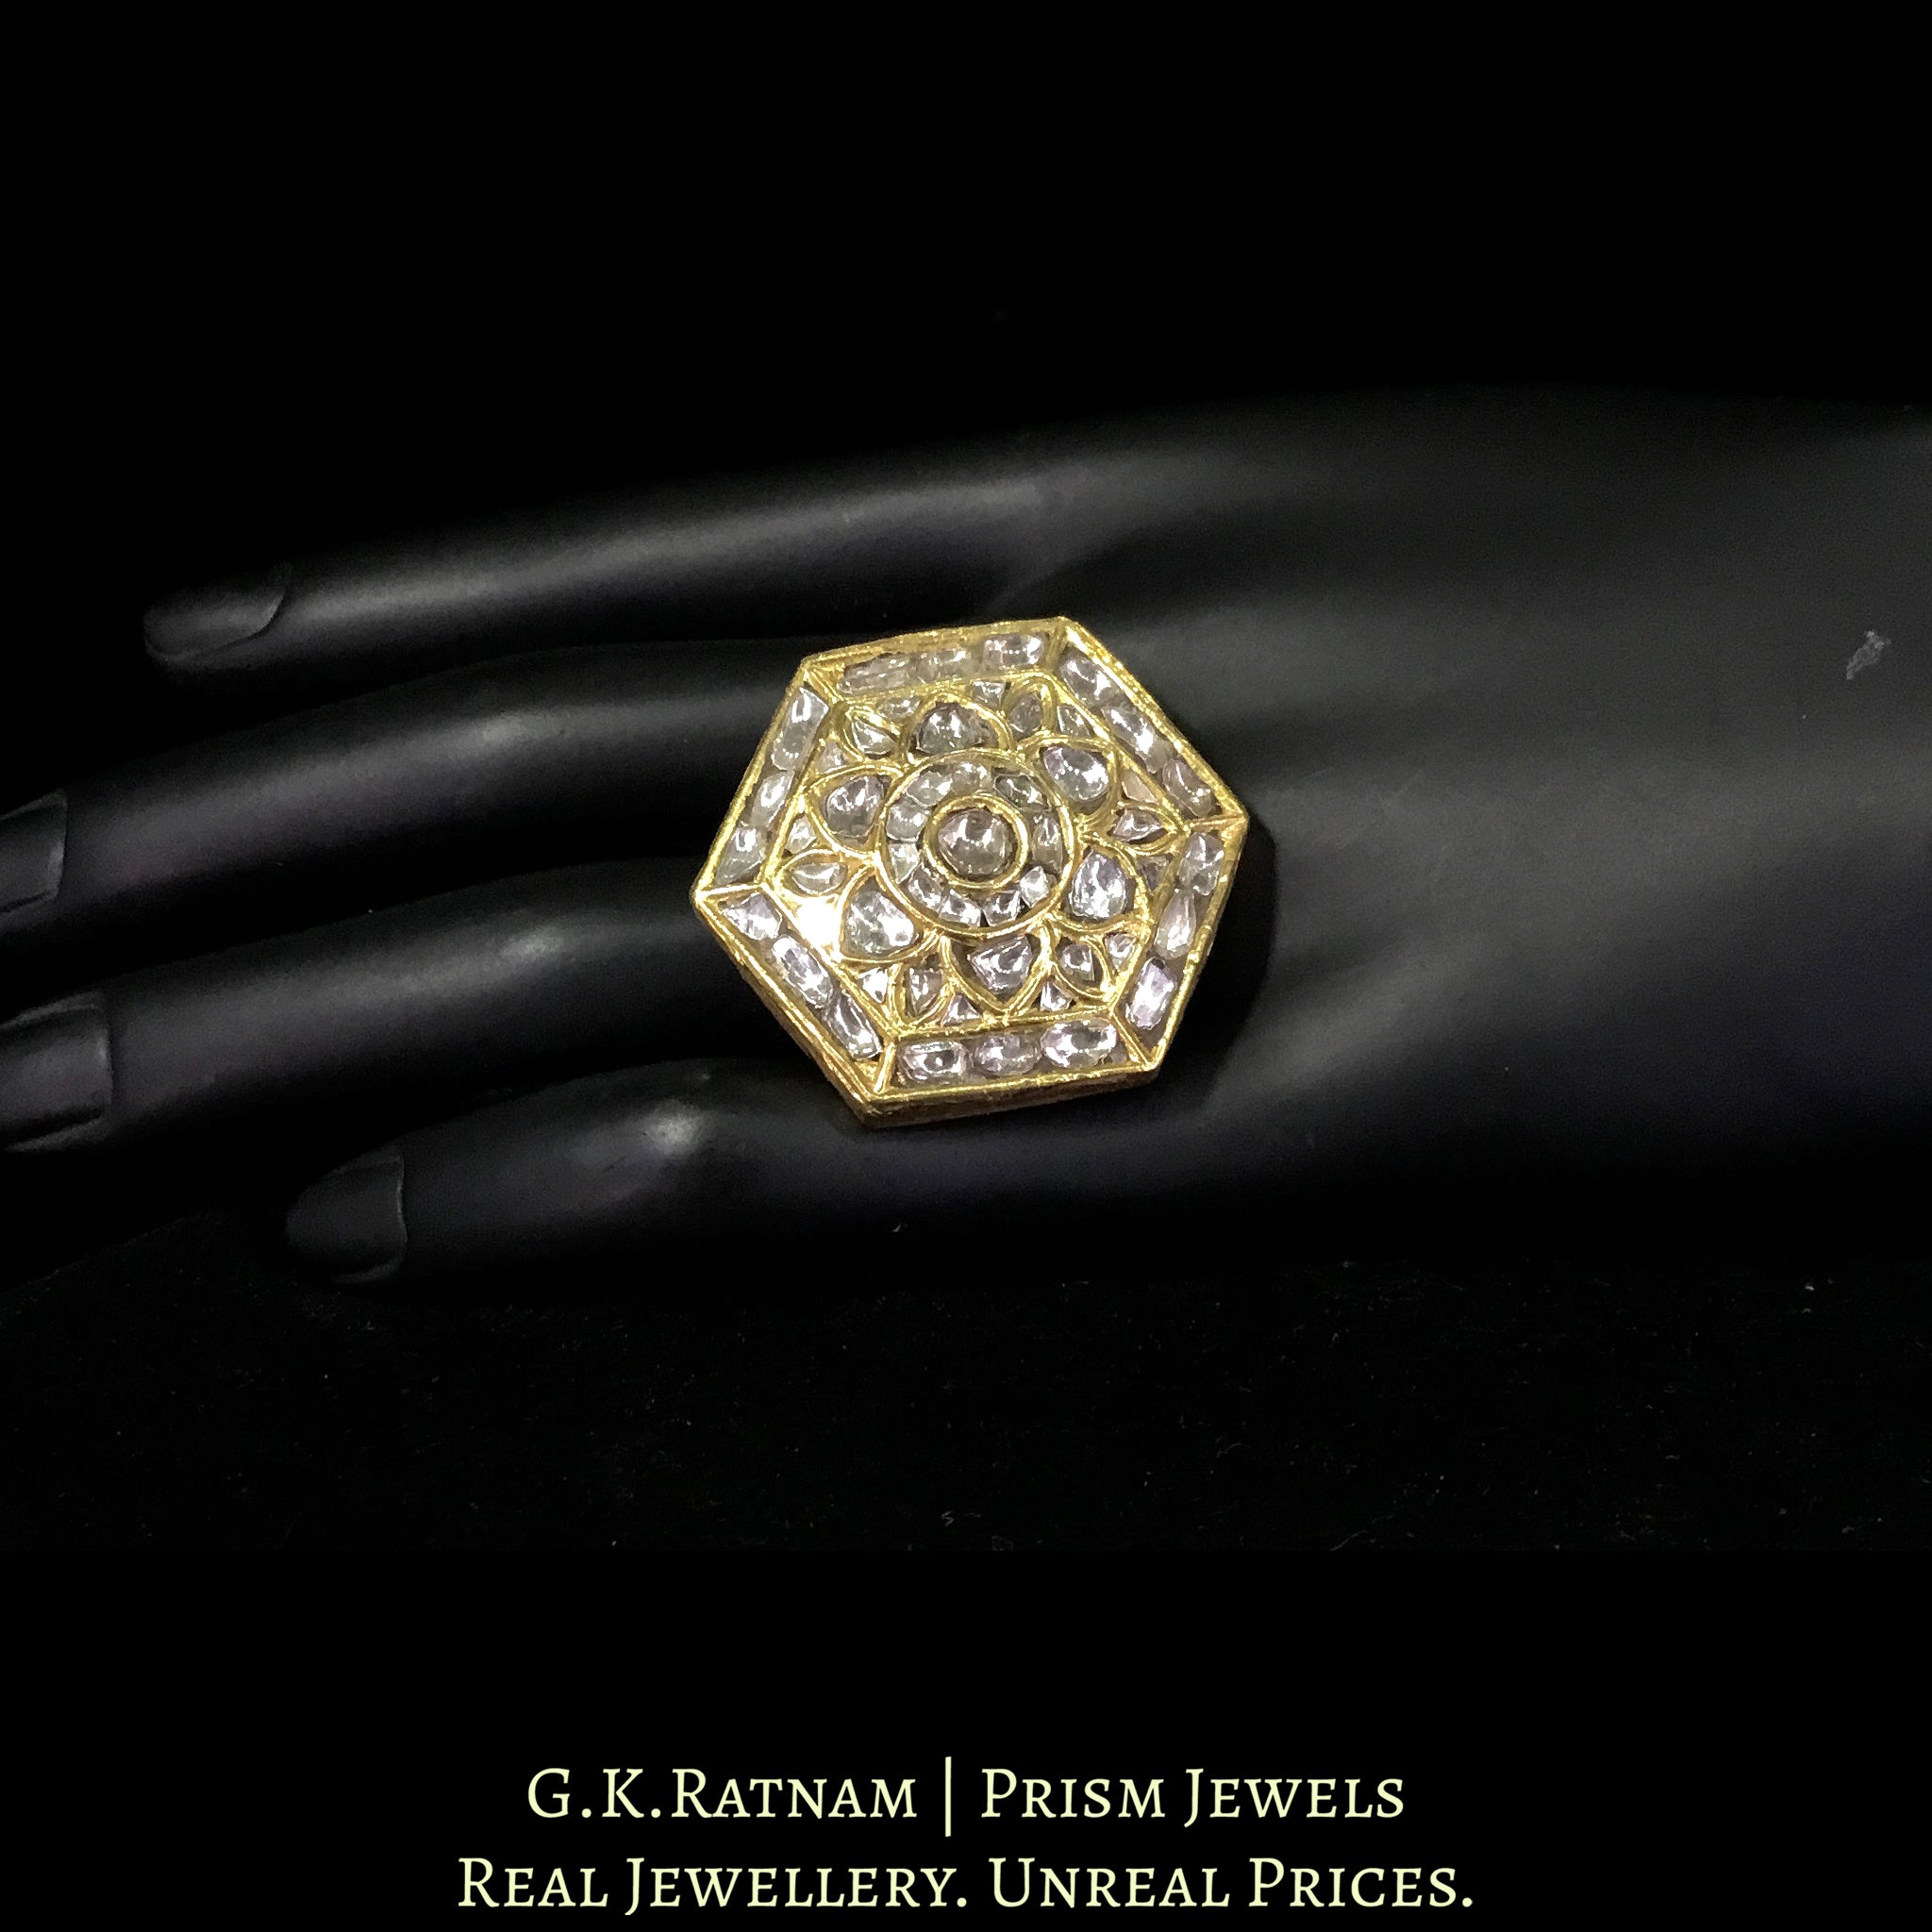 23k Gold and Diamond Polki Octagonal Ring